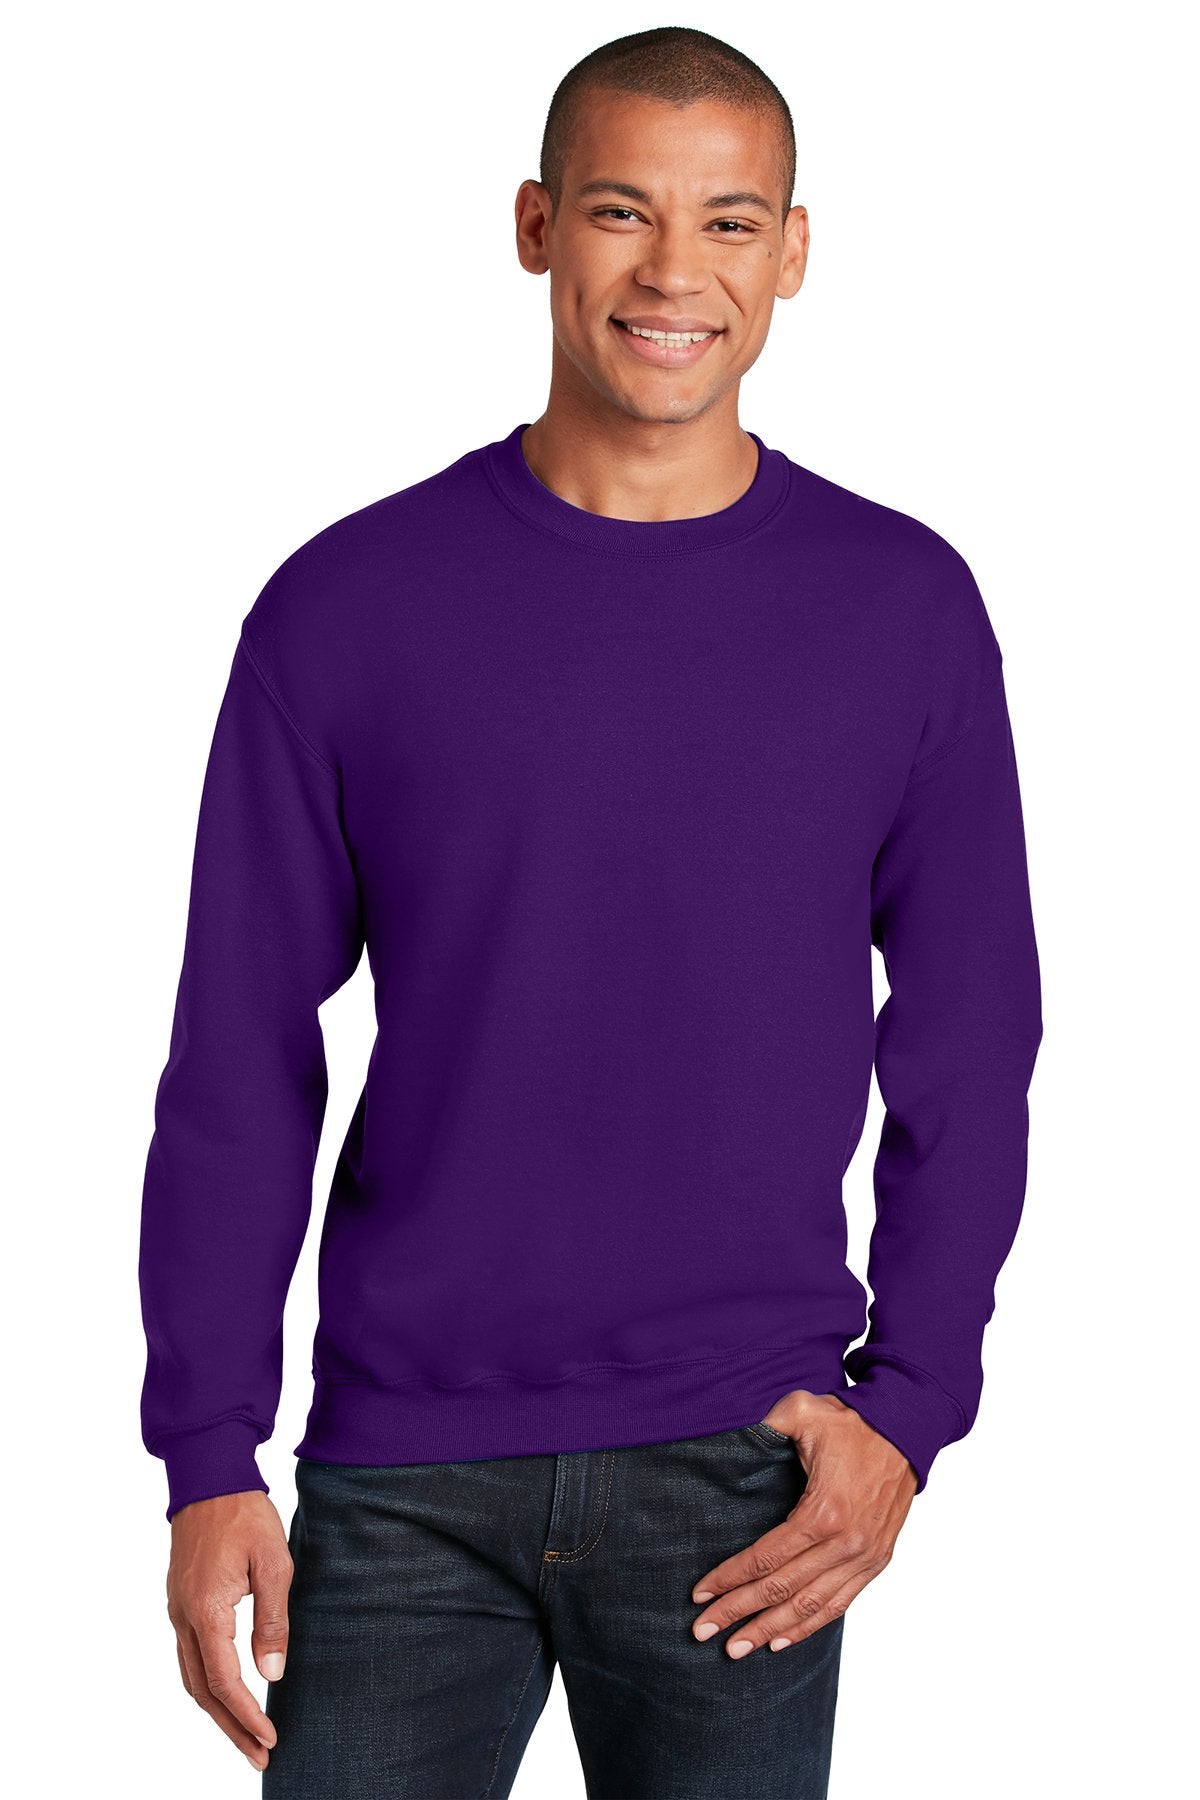 Gildan Purple 18000 custom logo sweatshirts embroidered